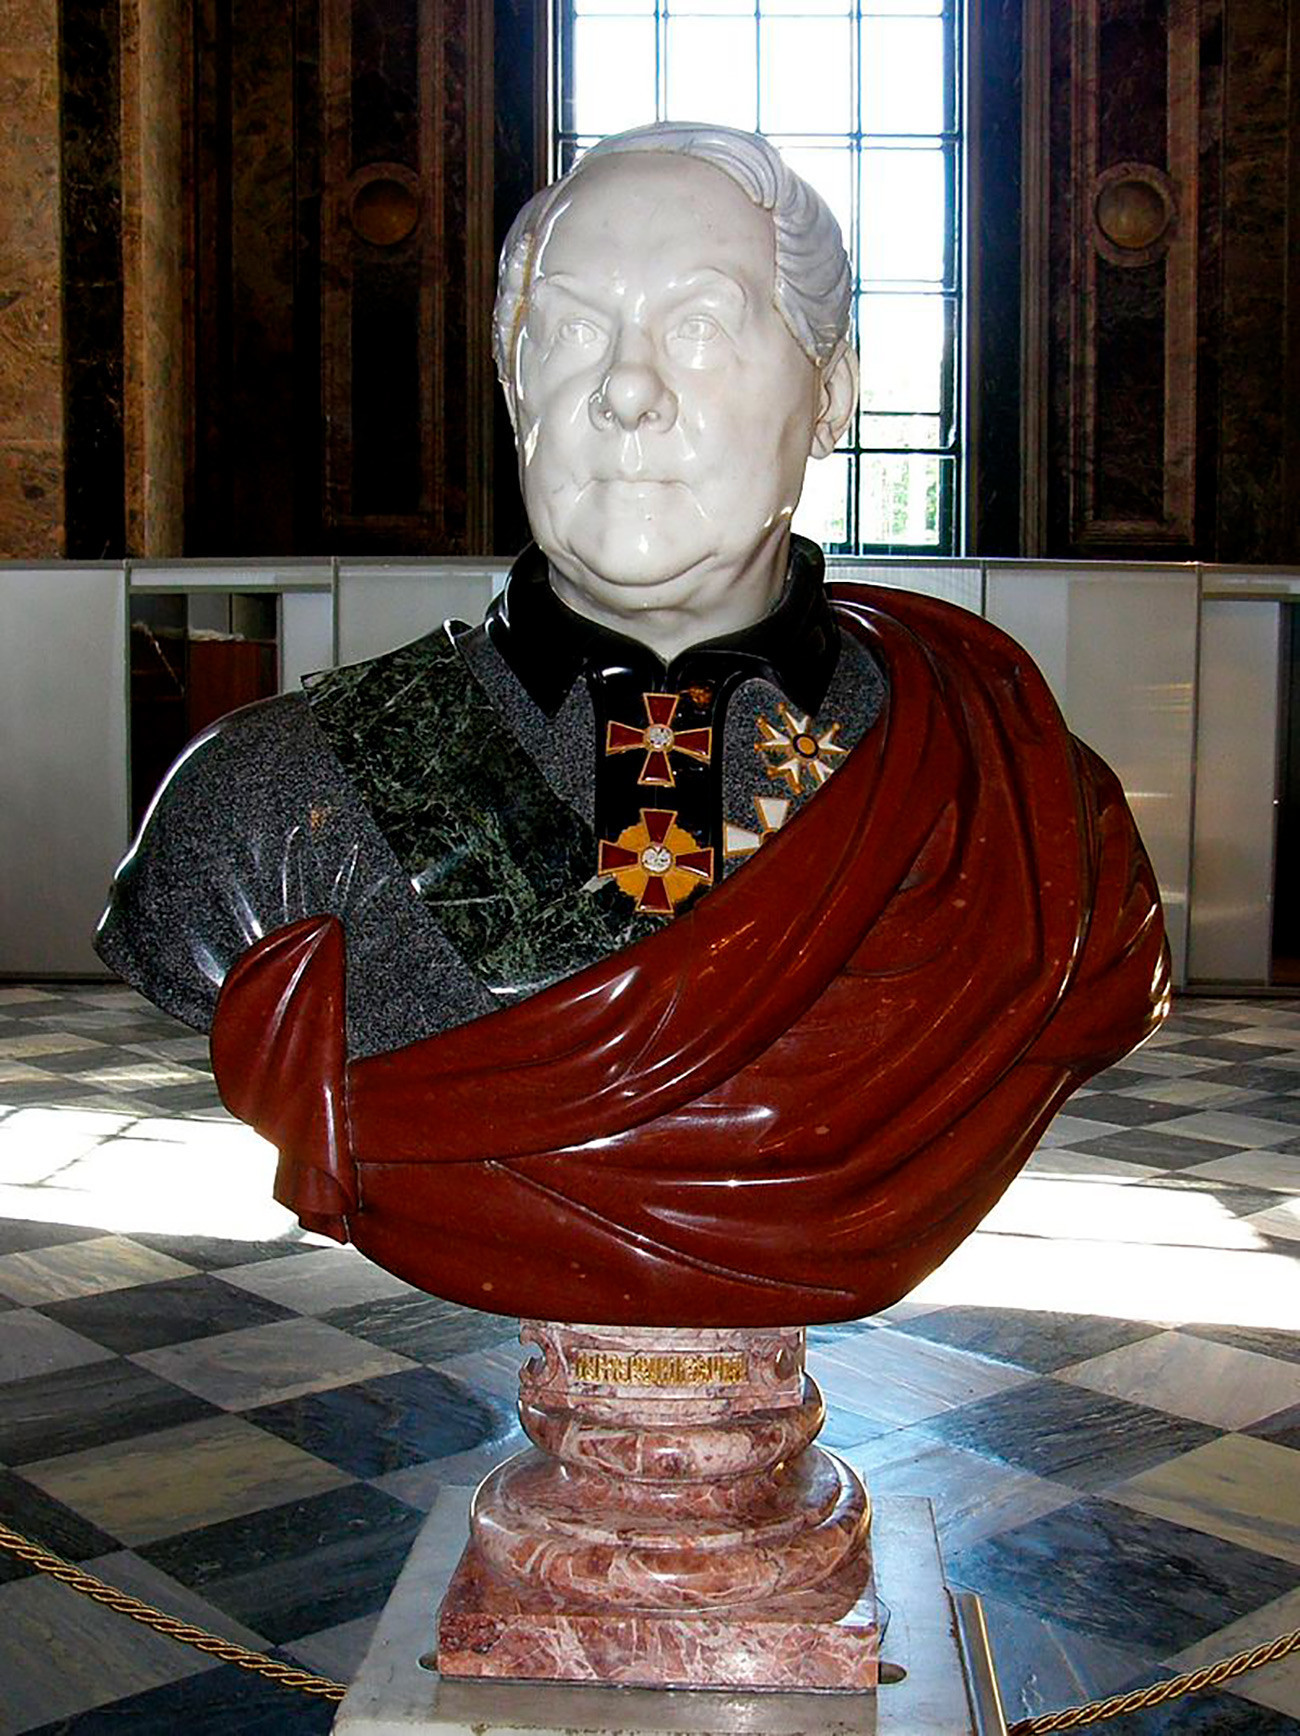 Busto de Auguste de Montferran

